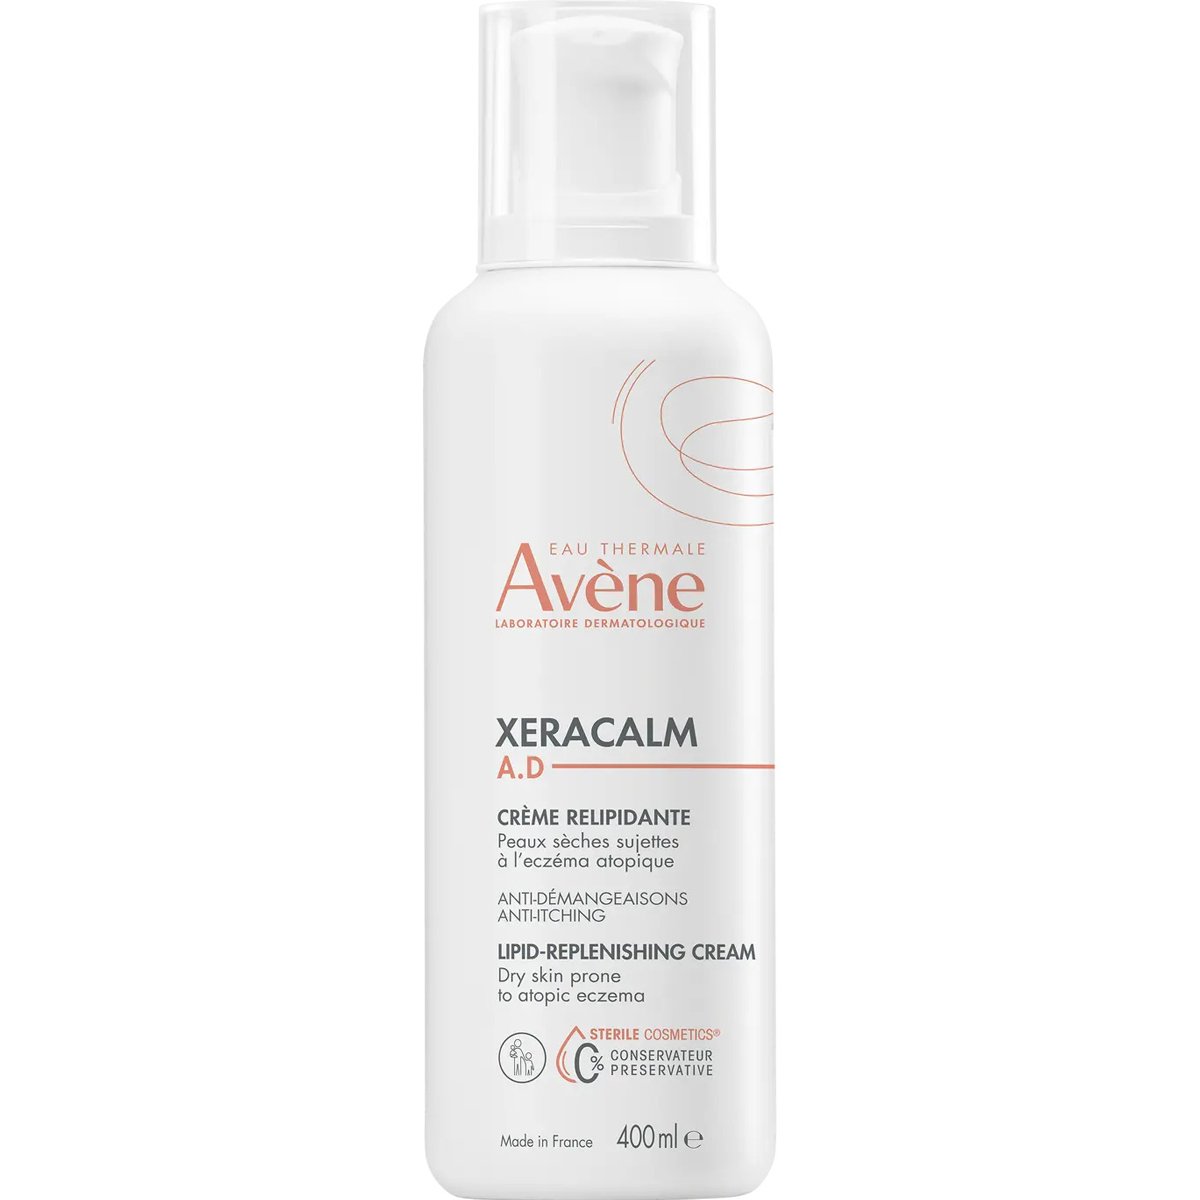 Avene Xeracalm A.D Lipid-Replenishing Cream Κρέμα Σώματος Αναπλήρωσης Λιπιδίων για Ανακούφιση του Ξηρού Δέρματος με Τάση για Ατοπικό Έκζεμα & Αίσθημα Κνησμού 400ml